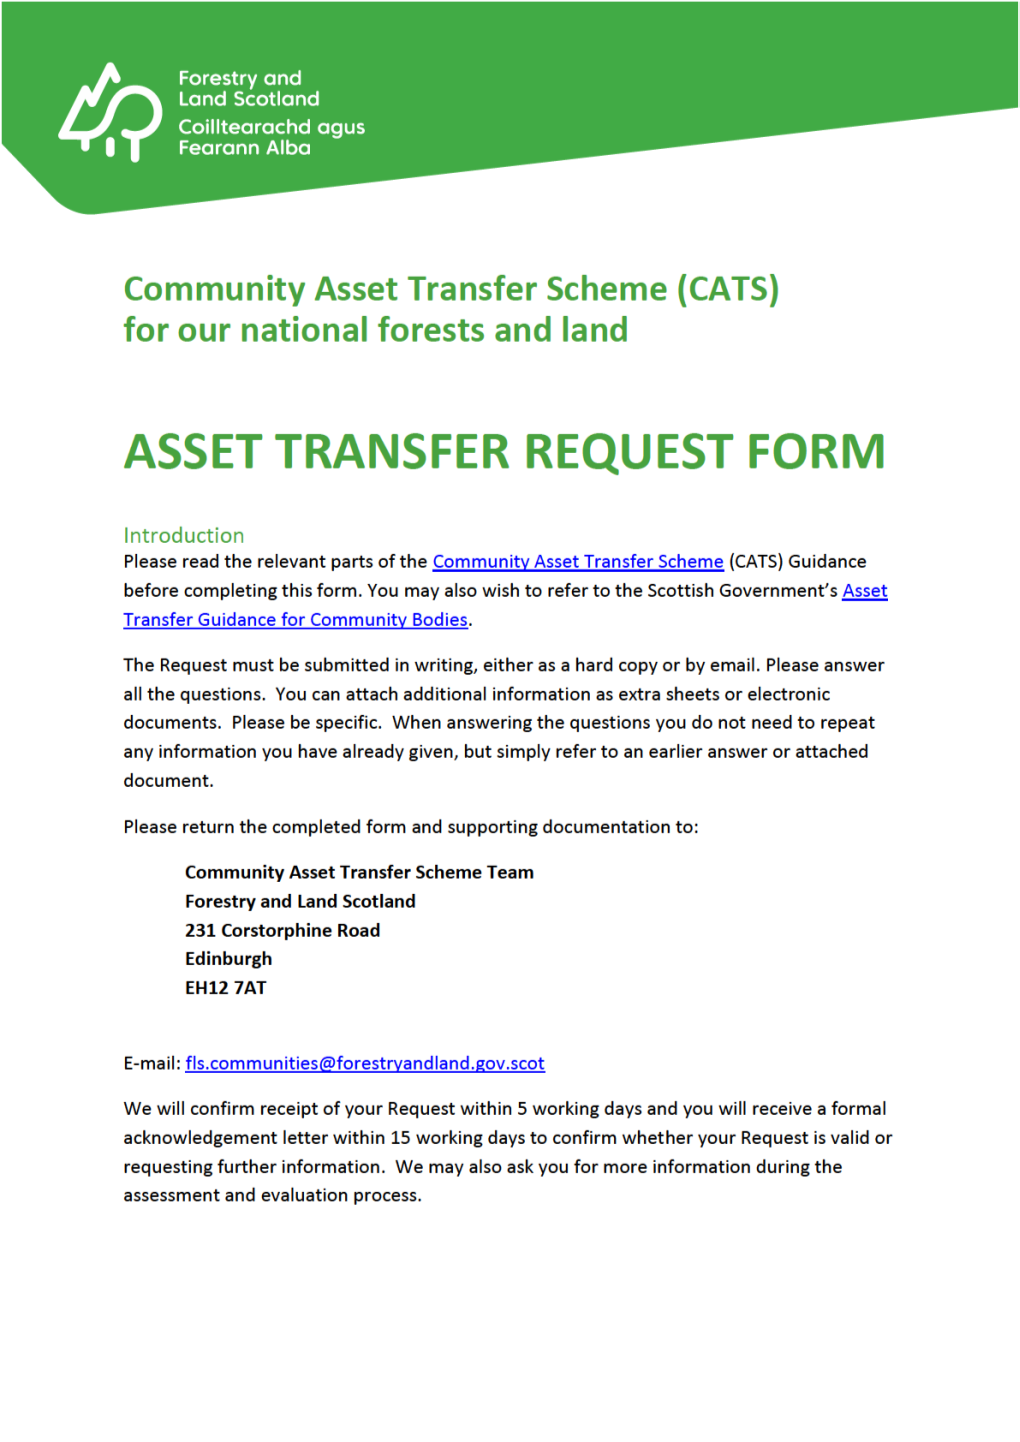 Community Asset Transfer Scheme Application Form